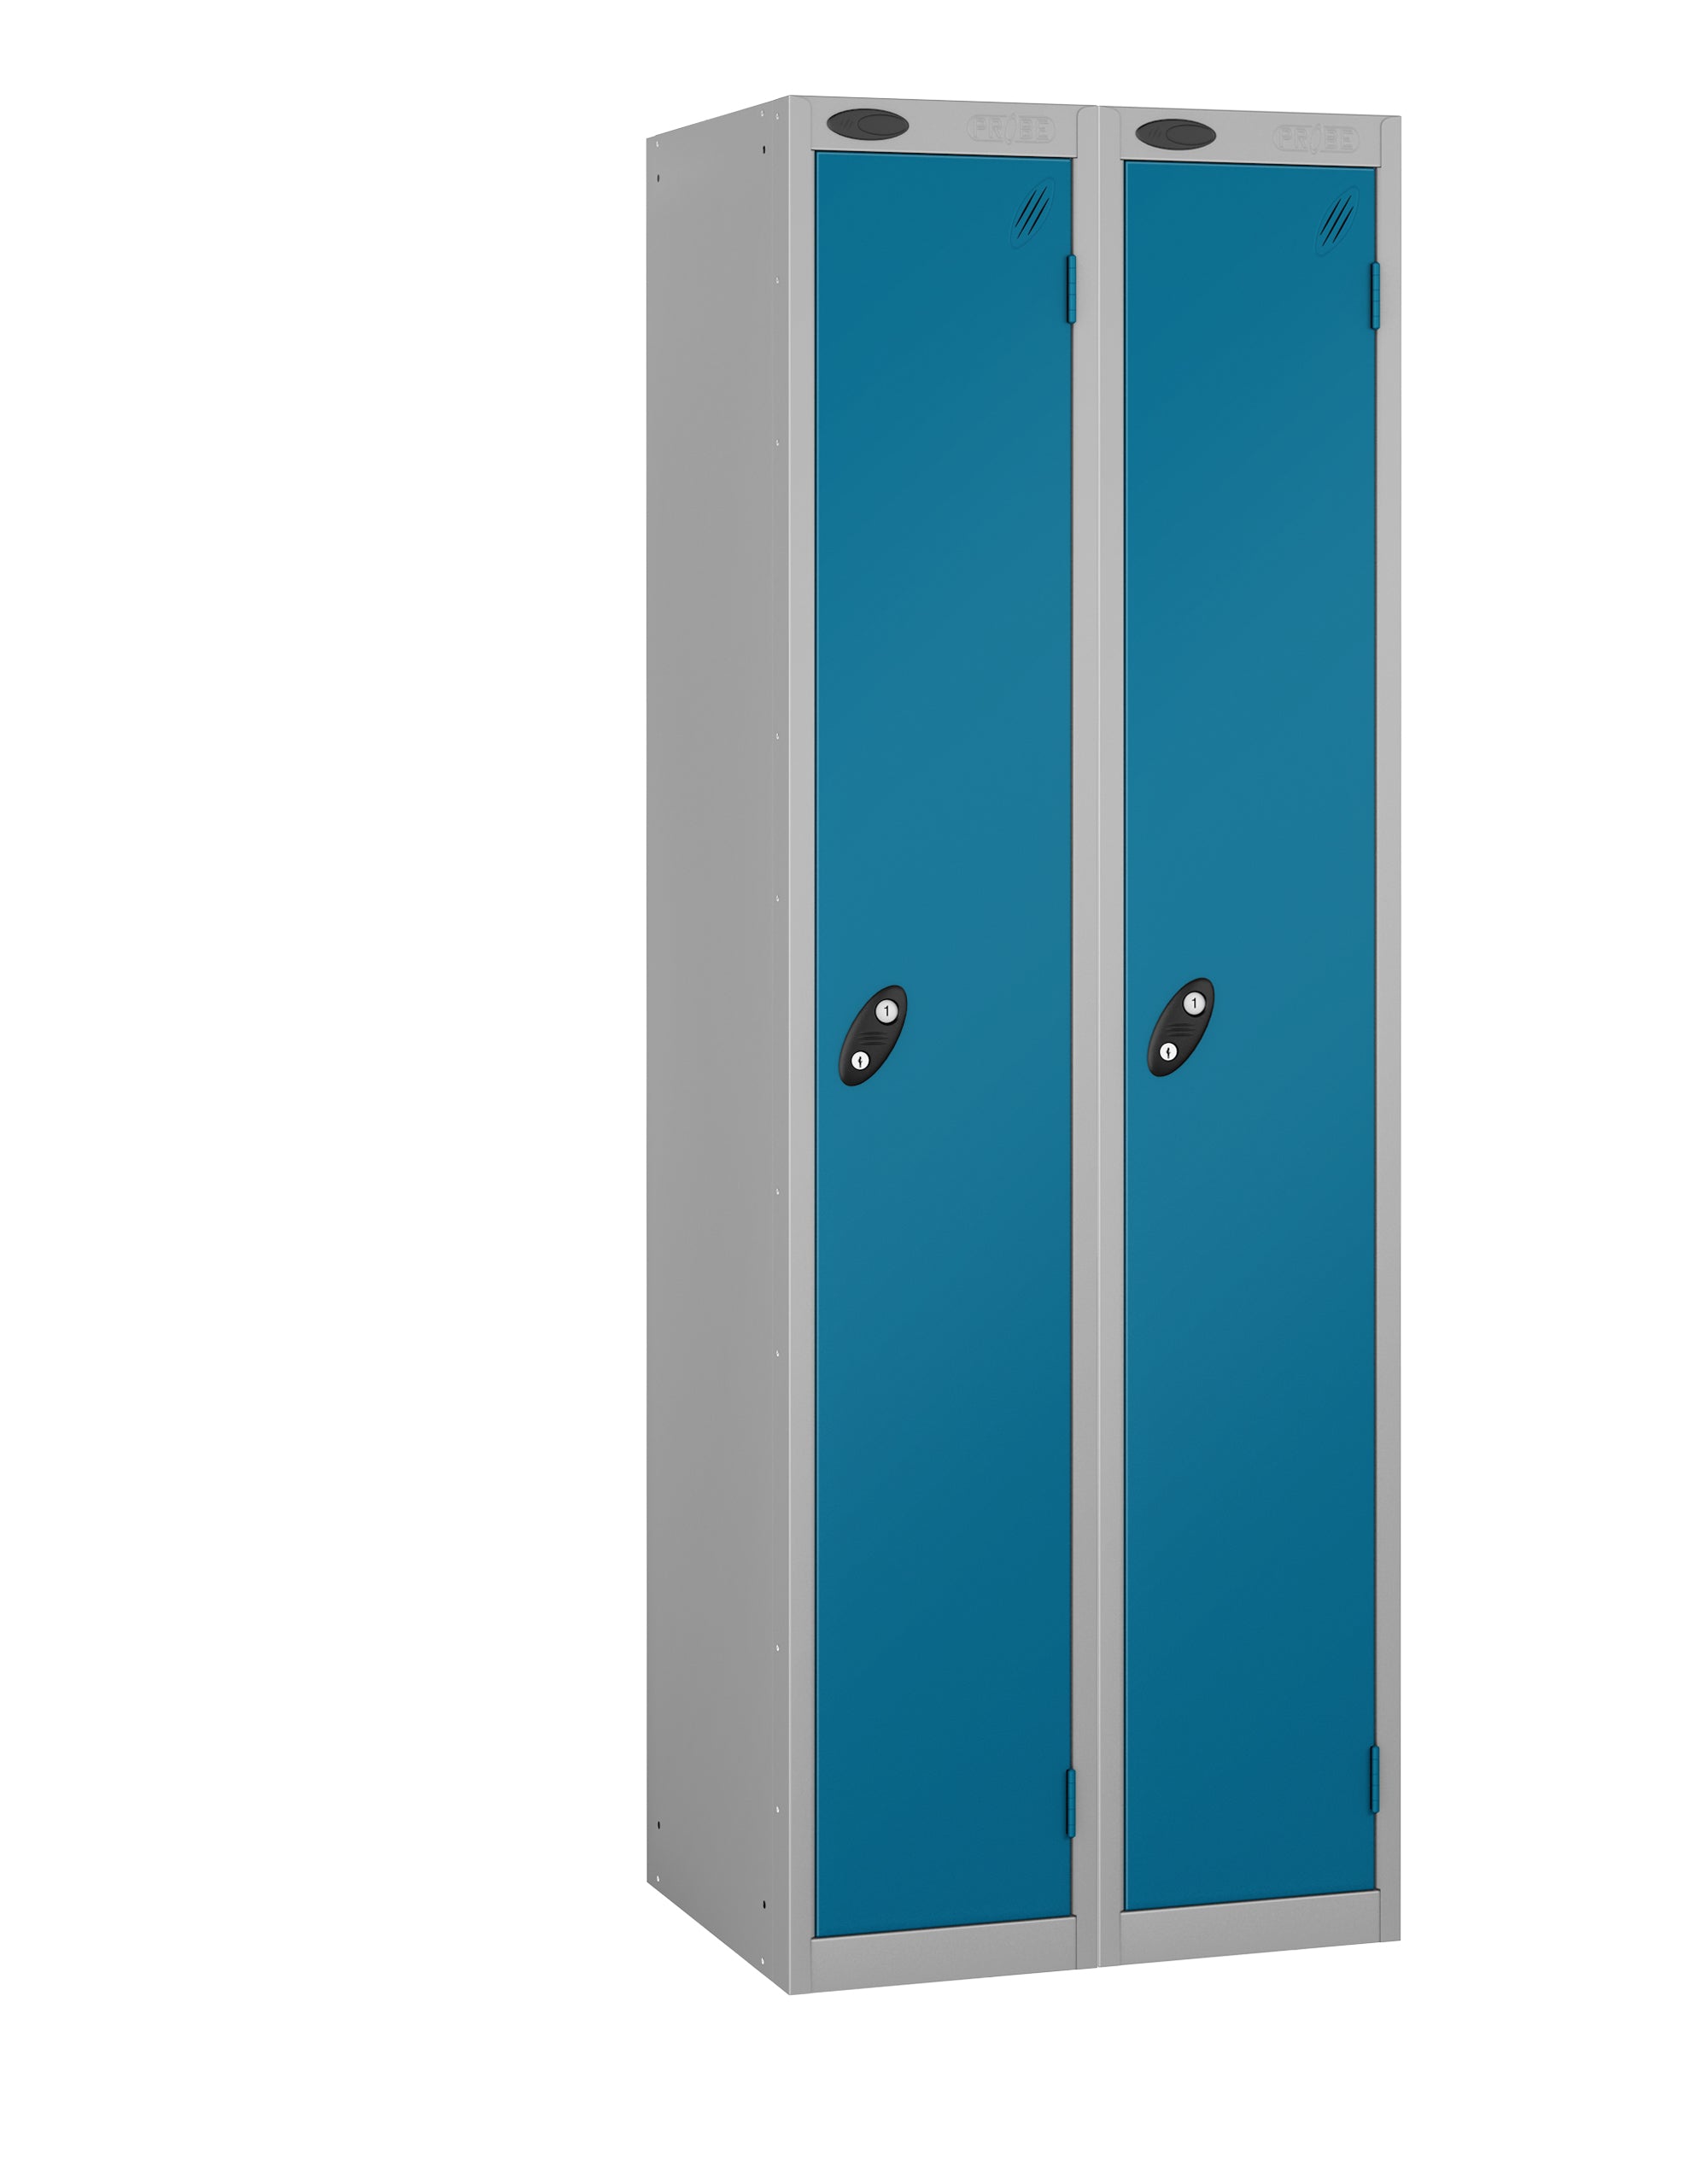 PROBEBOX STANDARD 2 NEST STEEL LOCKERS - ELECTRIC BLUE 1 DOOR Storage Lockers > Lockers > Cabinets > Storage > Probe > One Stop For Safety   